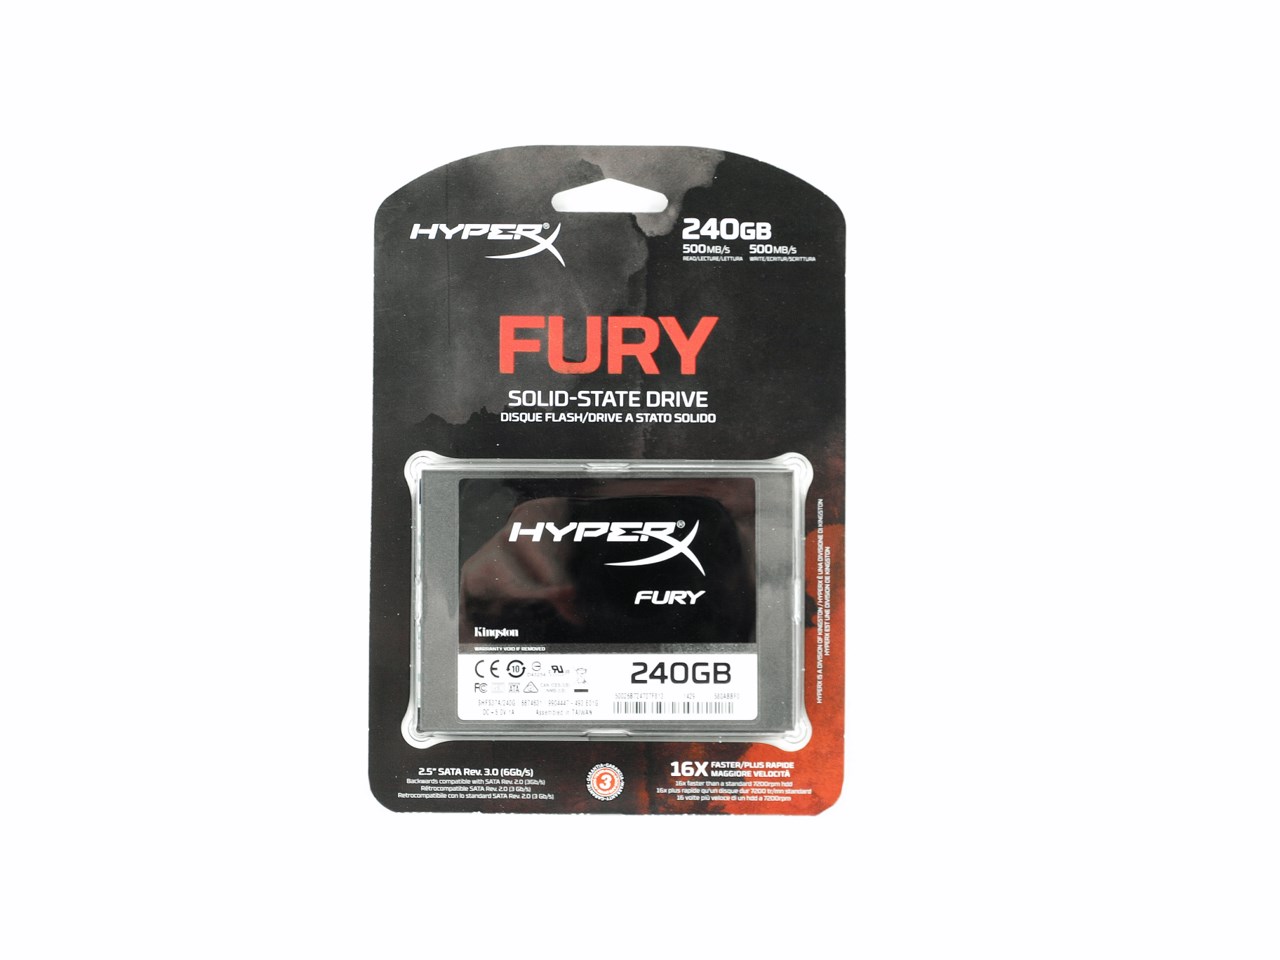 Siege Persistent Auroch Kingston HyperX FURY 240GB SSD Review